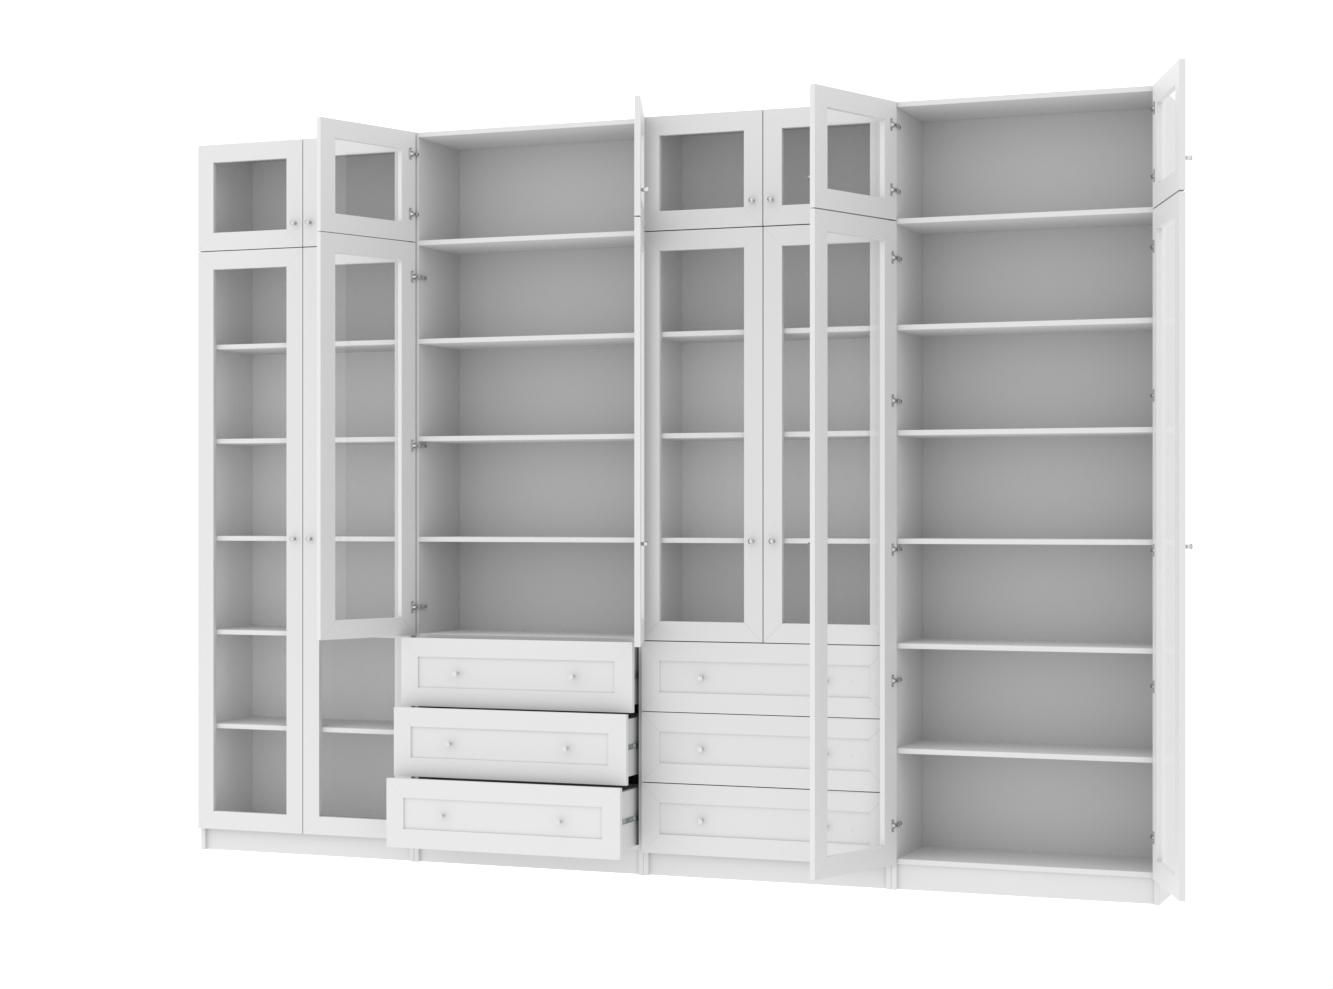 Книжный шкаф Билли 372 white ИКЕА (IKEA) изображение товара